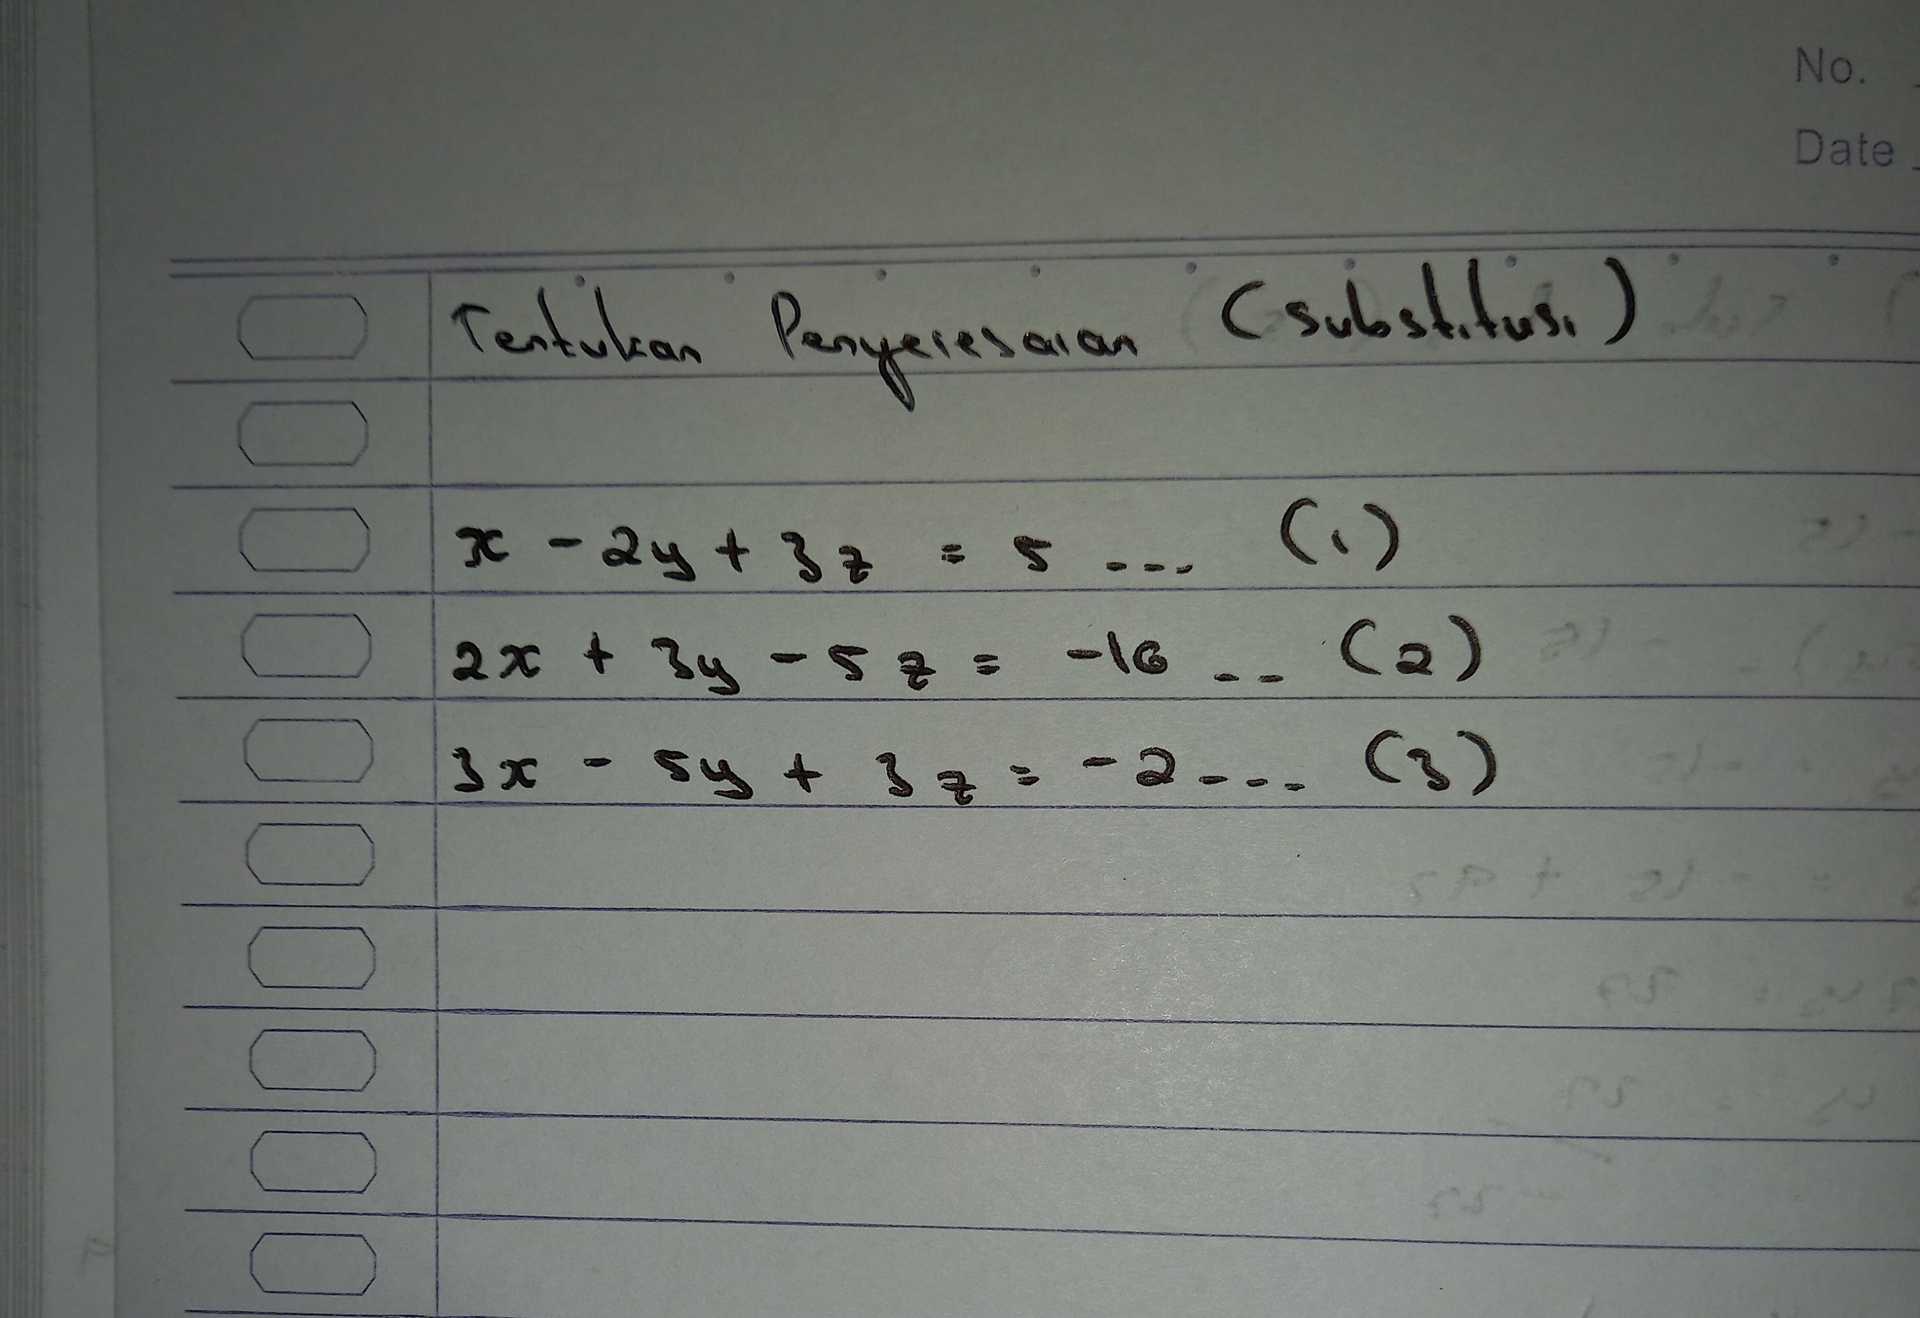 No. Date Tentukan Penyelesaian (substitusi ) ( $ dolololololololo x - 2y + 3z () 2x + 3y - 5z = -16. (a) . ( 3x - sy + 3 z = -2... (3) . + 3 3 (3 